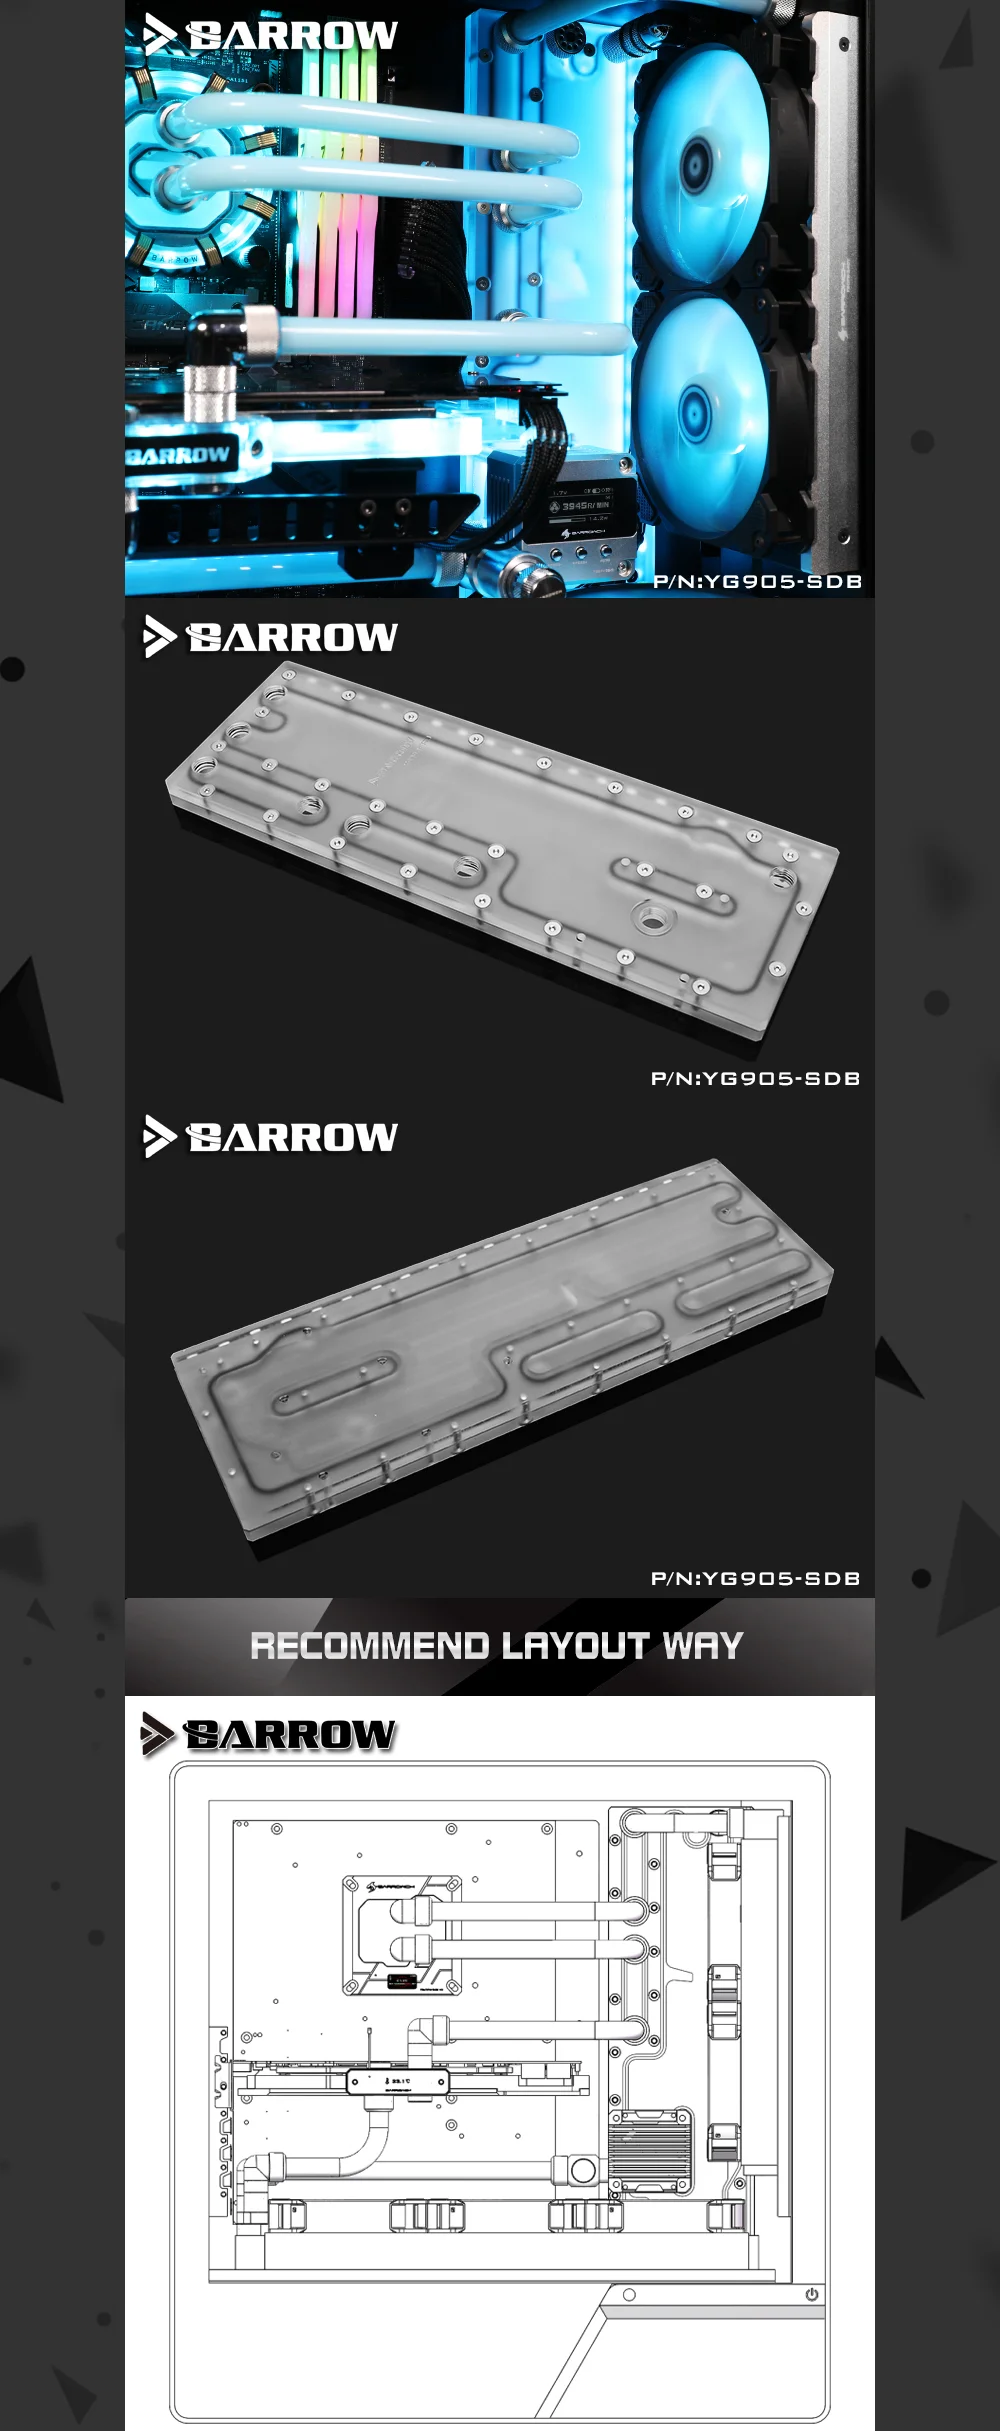 Barrow YG905-SDB, Waterway Boards For In Win 905 Case, For Intel CPU Water Block & Single GPU Building  